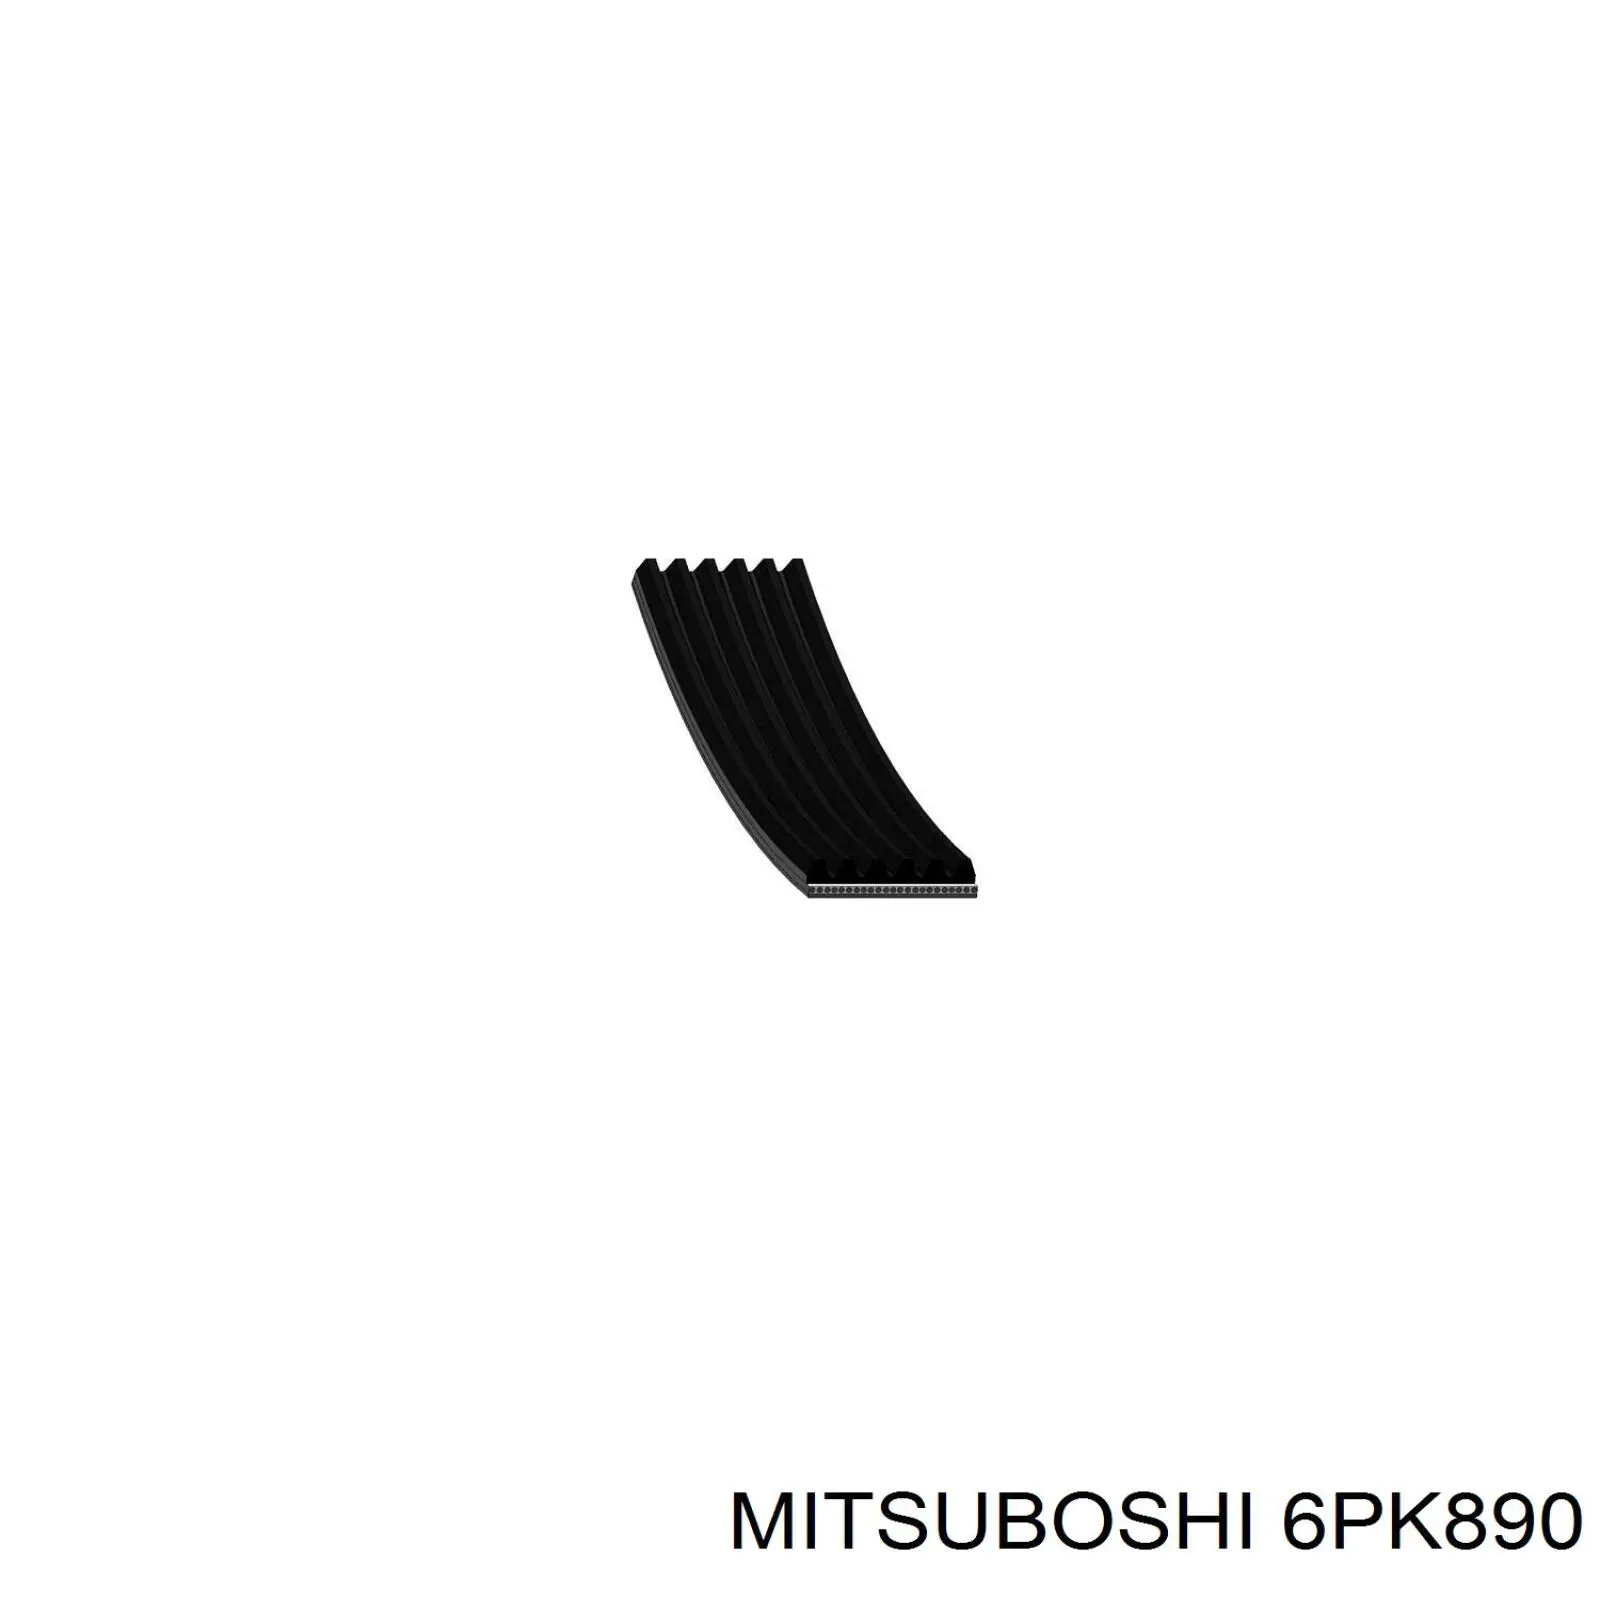 6PK890 Mitsuboshi ремень генератора